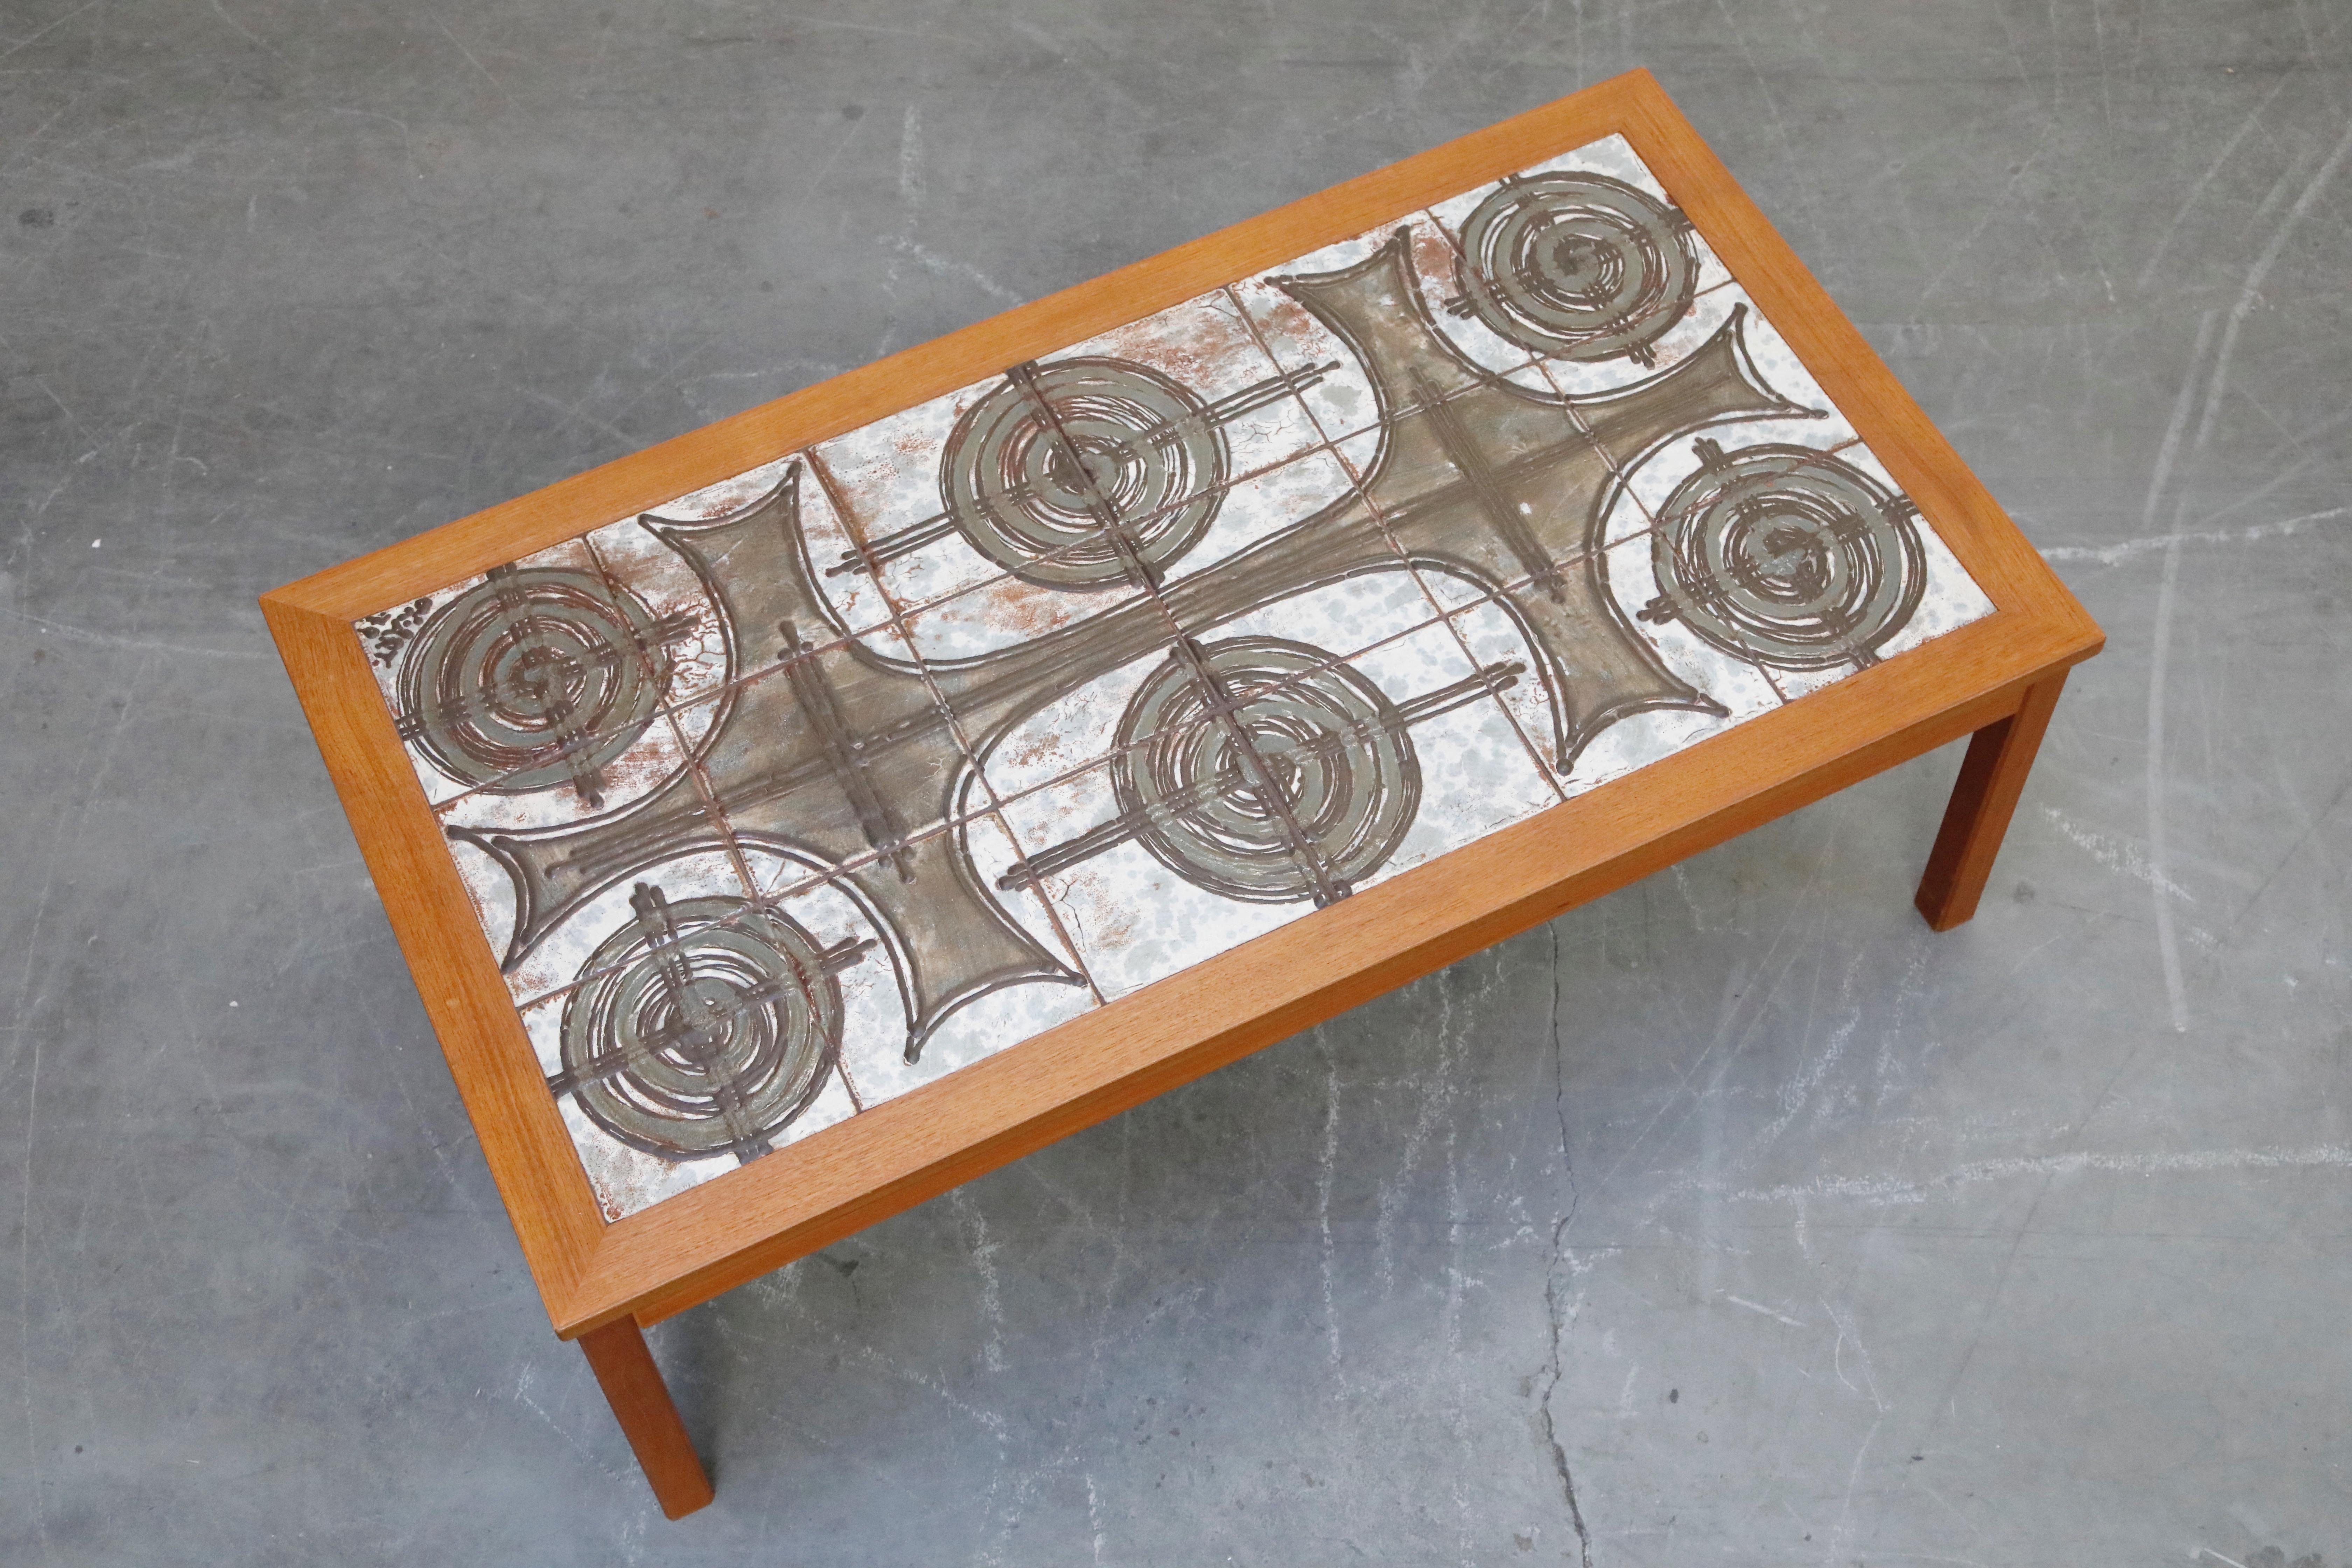 Late 20th Century Danish Modern Ceramic Tile Teak Coffee Table by Ox Art, 1979, Signed